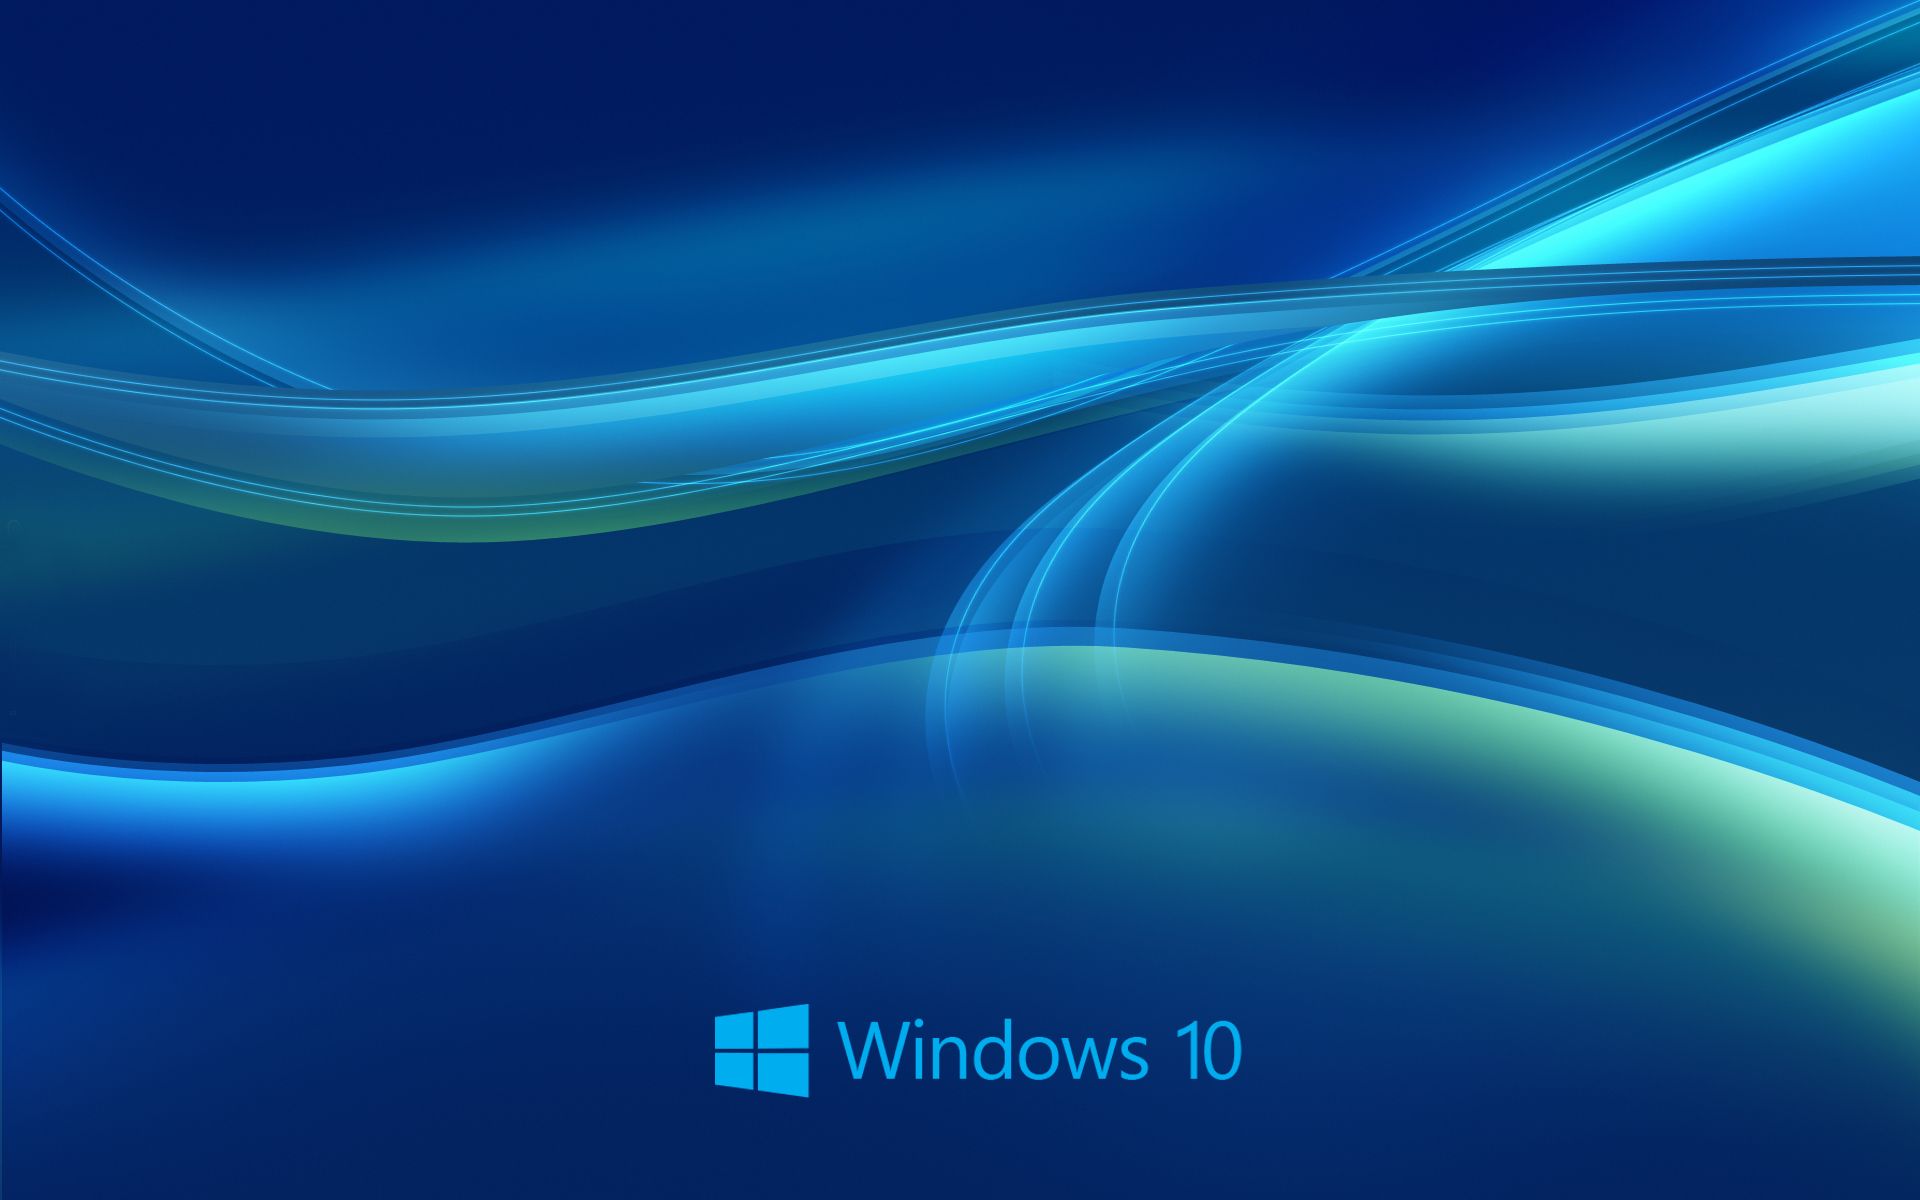 Windows 10 New HD Wallpaper. Wallpaper windows Free desktop wallpaper, Desktop wallpaper background